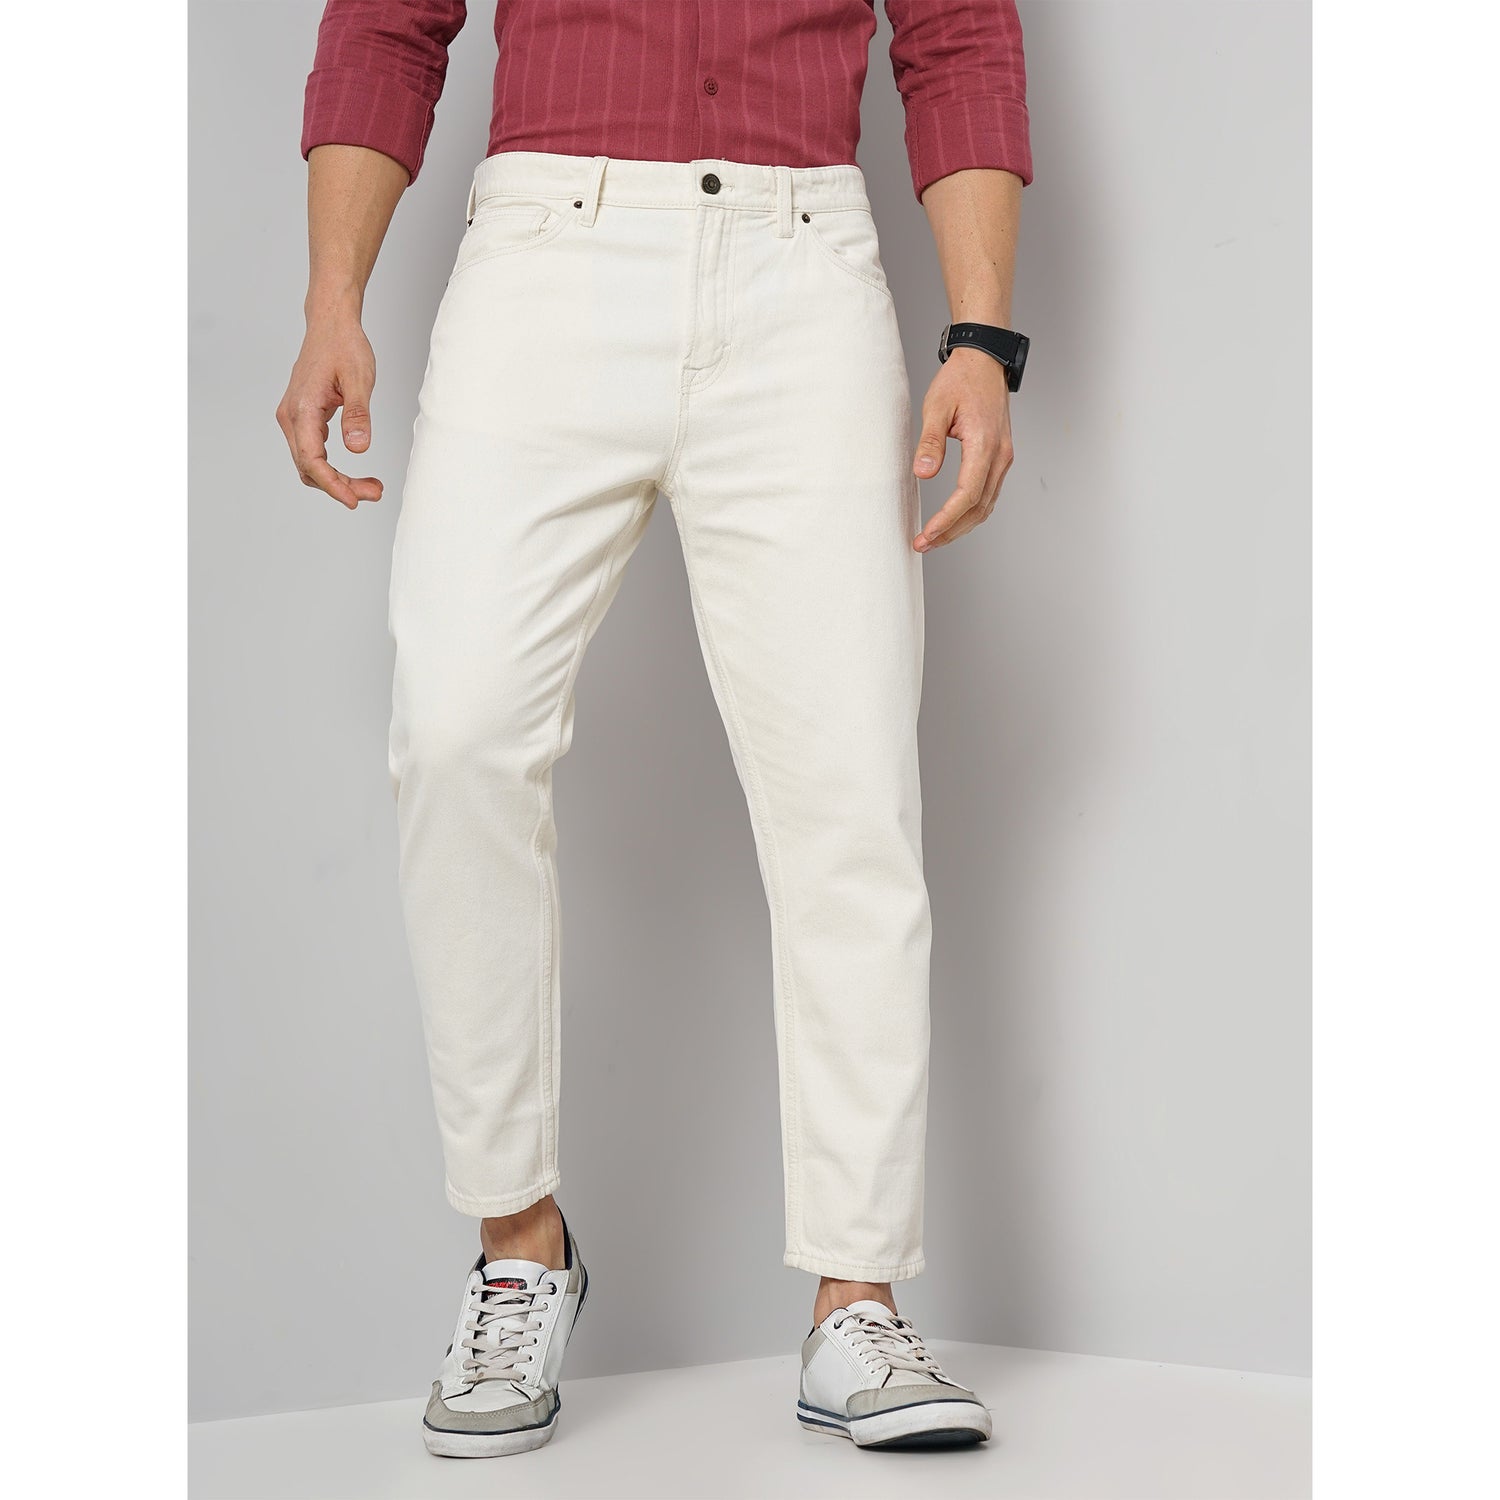 Men's Solid Ecru Cotton Regular Jeans (BORELAX)